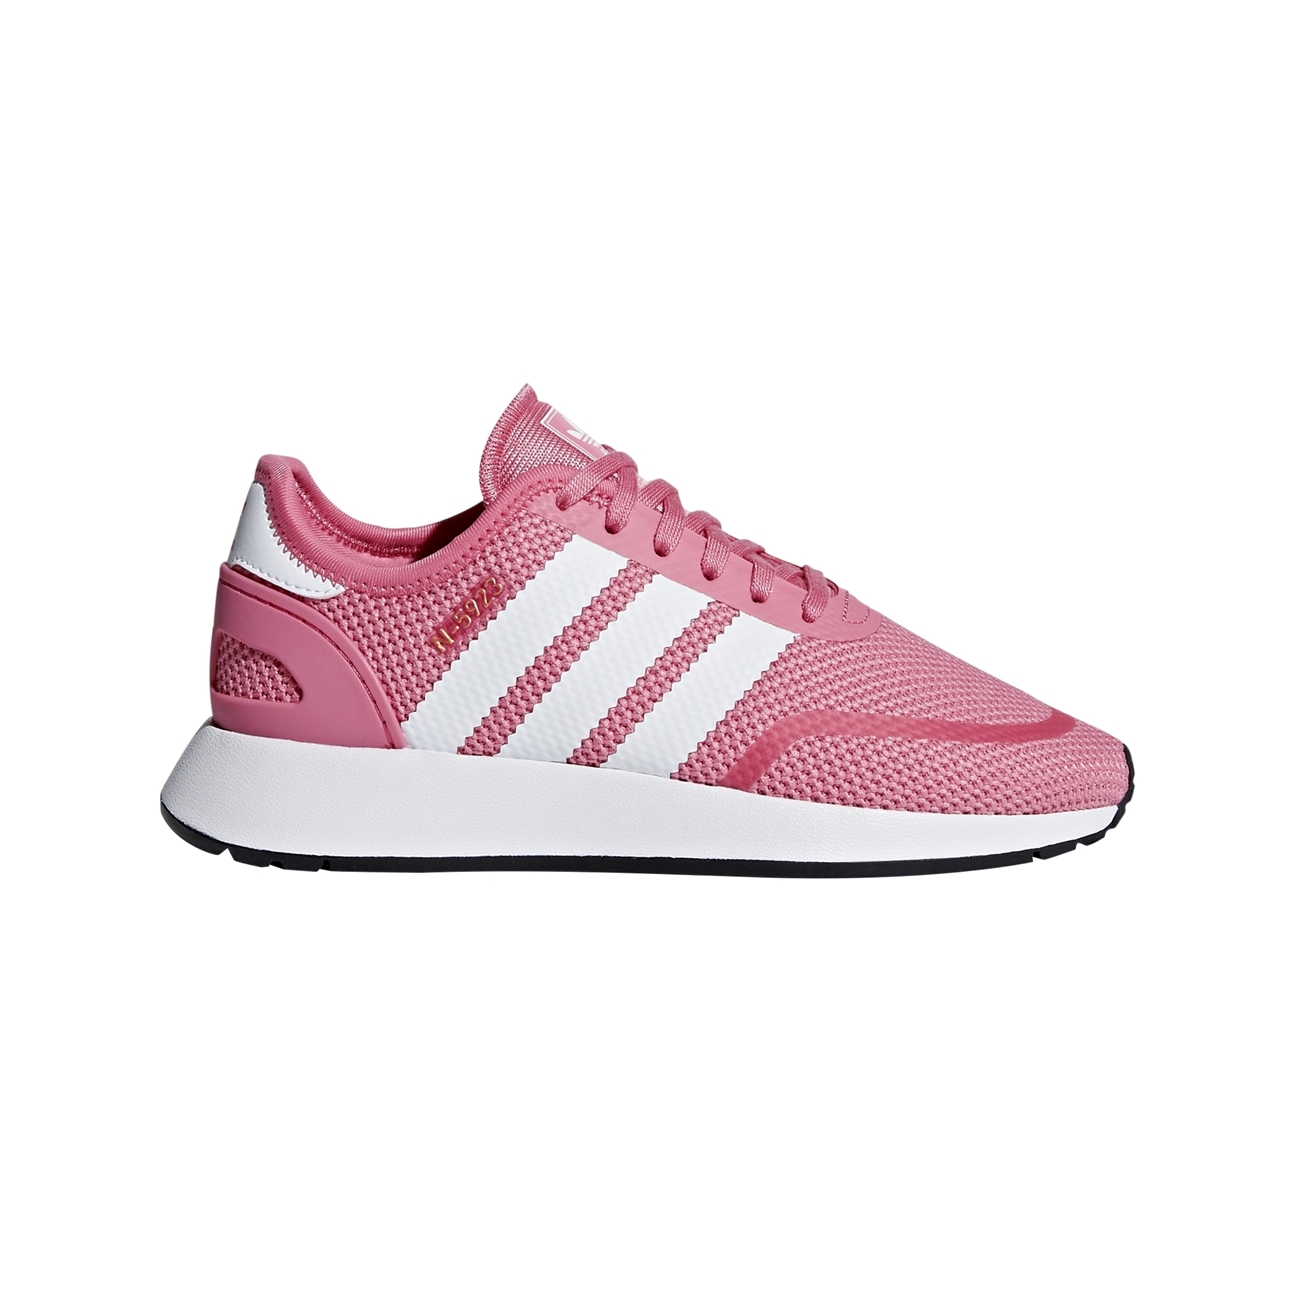 Cita recoger hipocresía Adidas Originals N-5923 Junior (Chalk Pink/white/Grey Three)